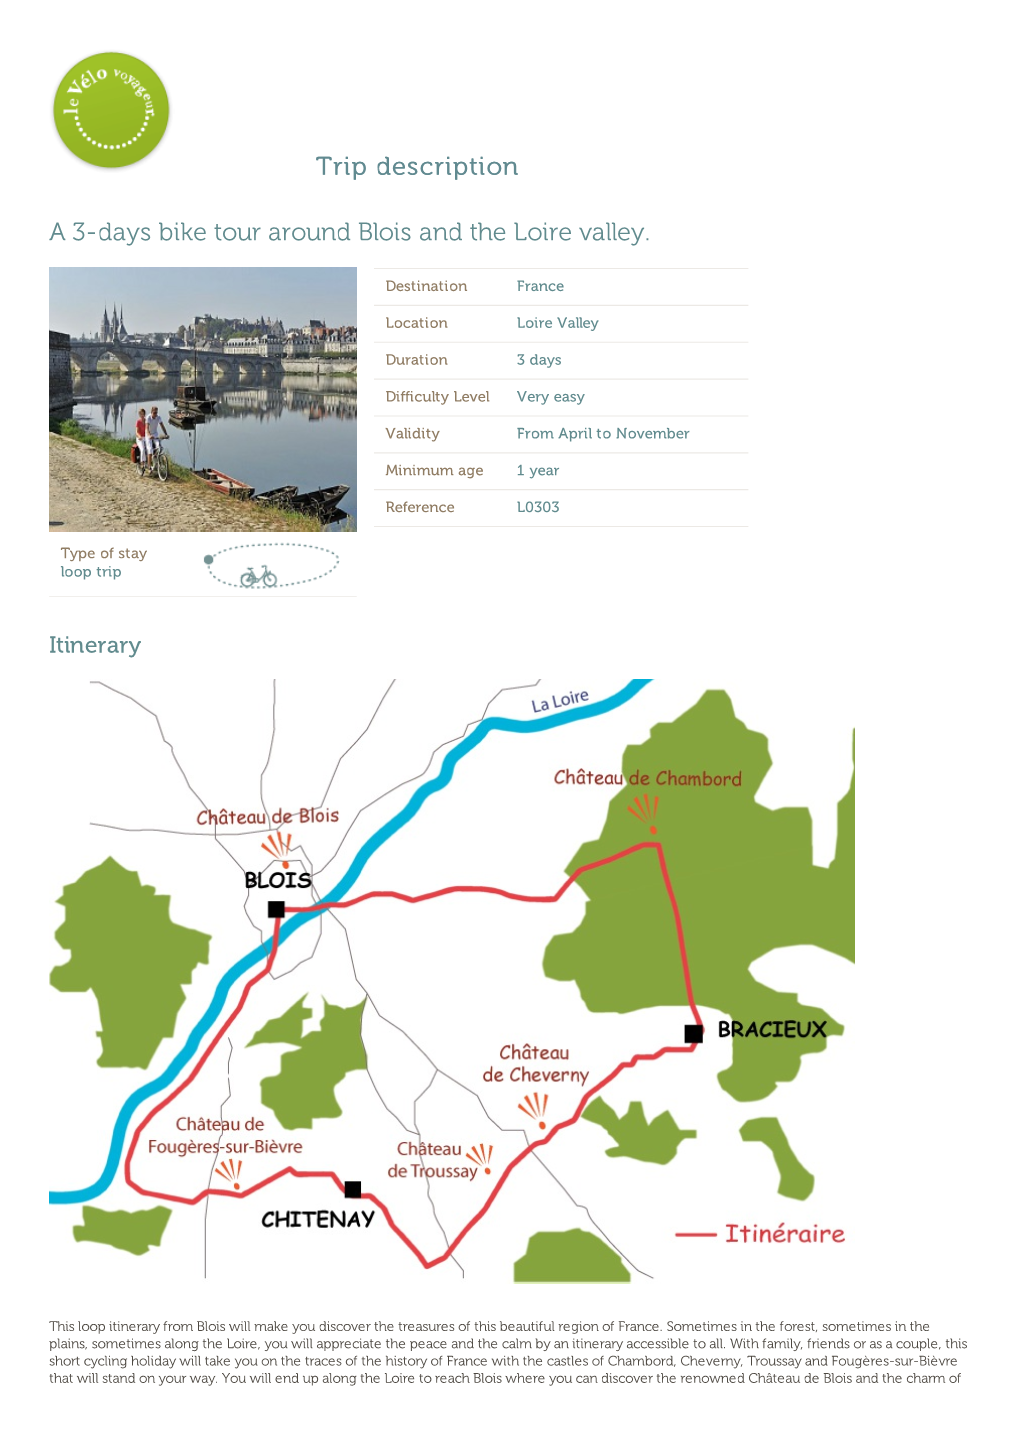 Trip Description a 3-Days Bike Tour Around Blois and the Loire Valley